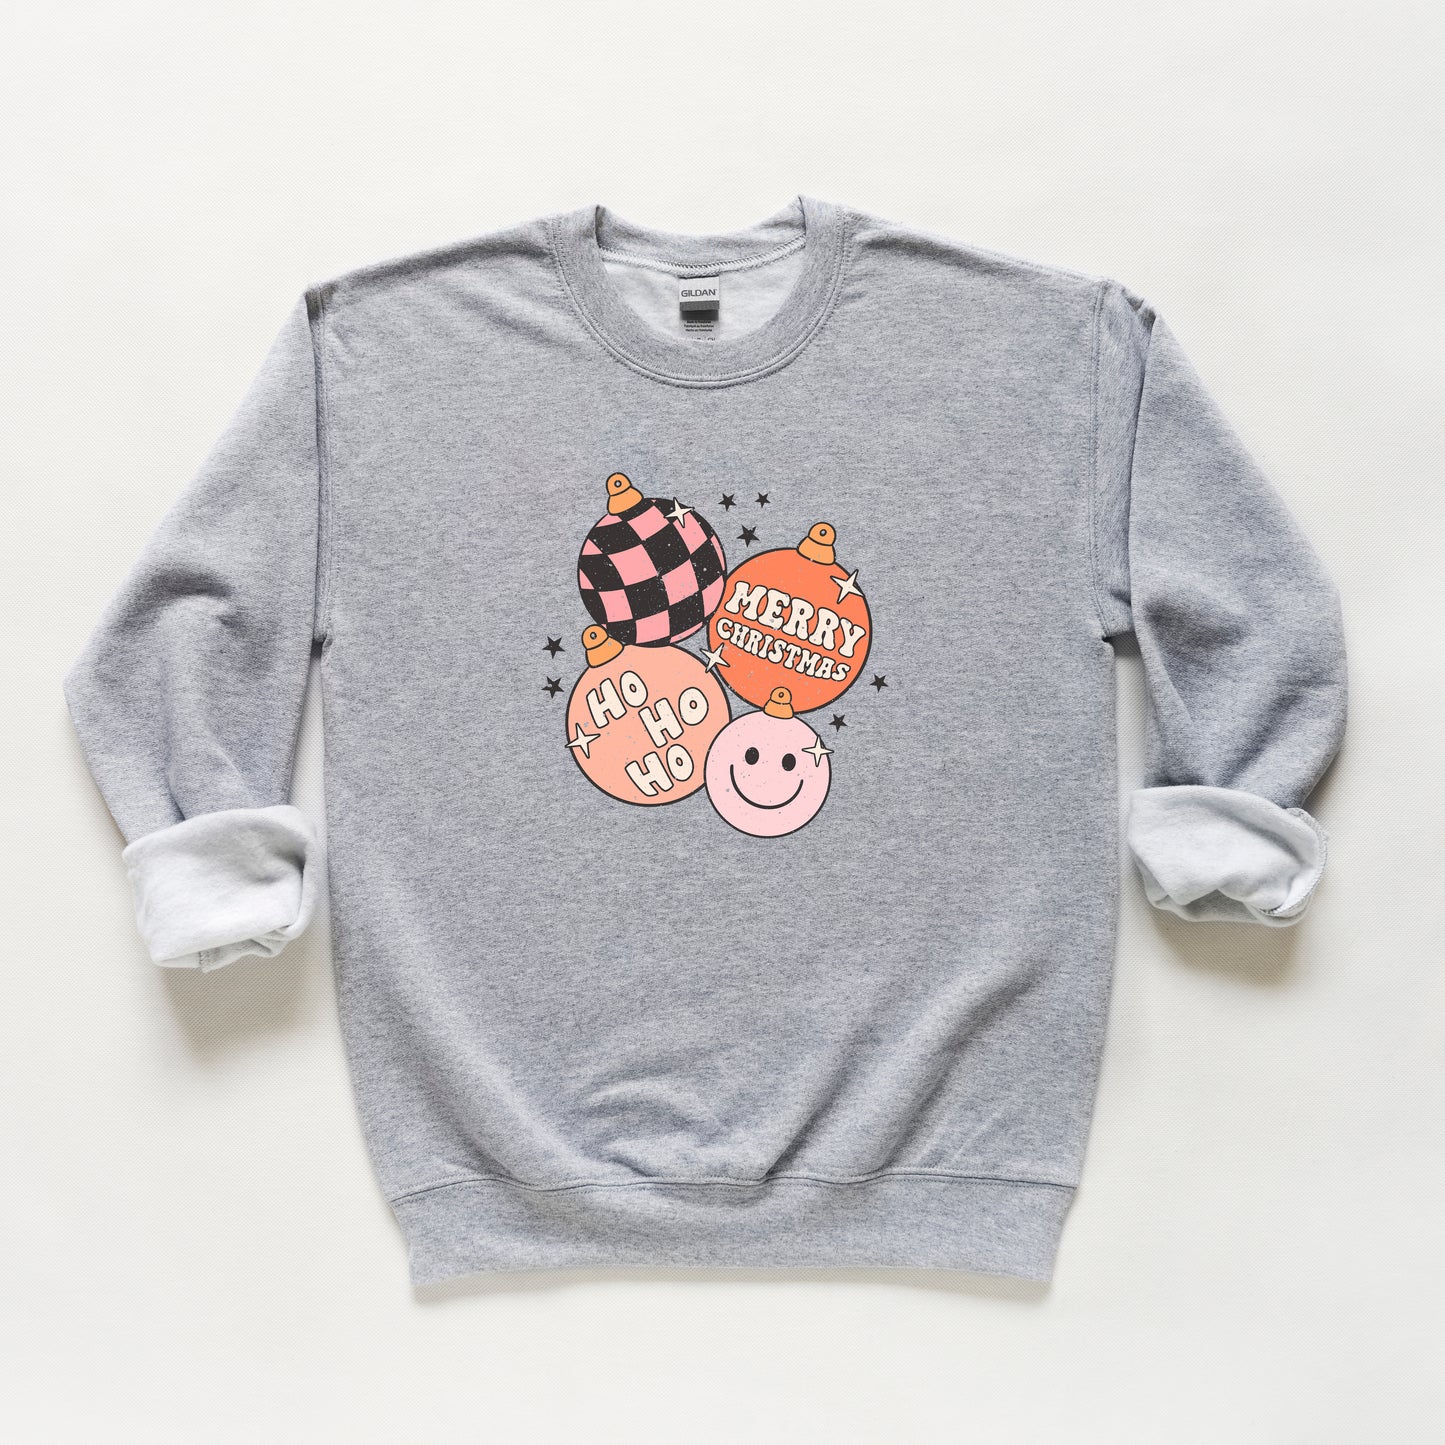 Retro Ornaments | Youth Sweatshirt